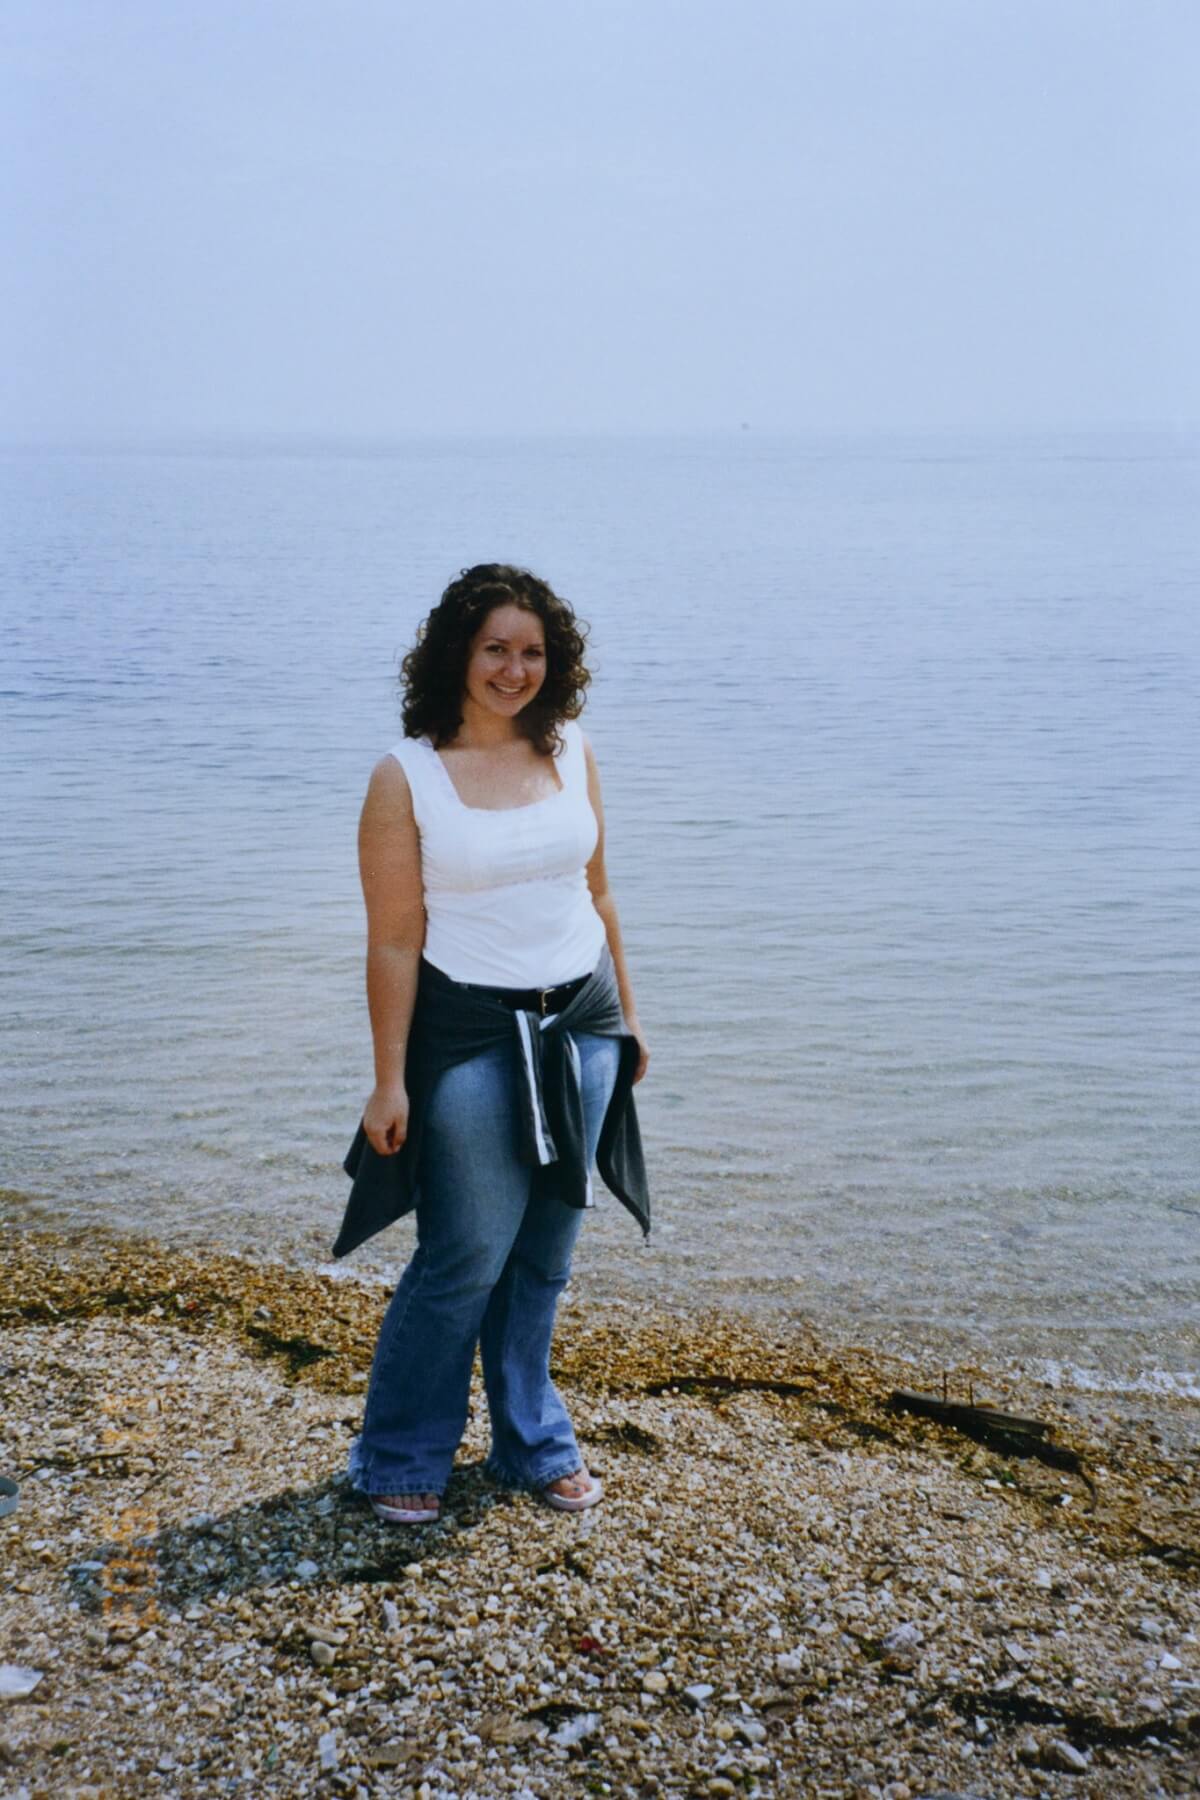 A girl standing on a beach.